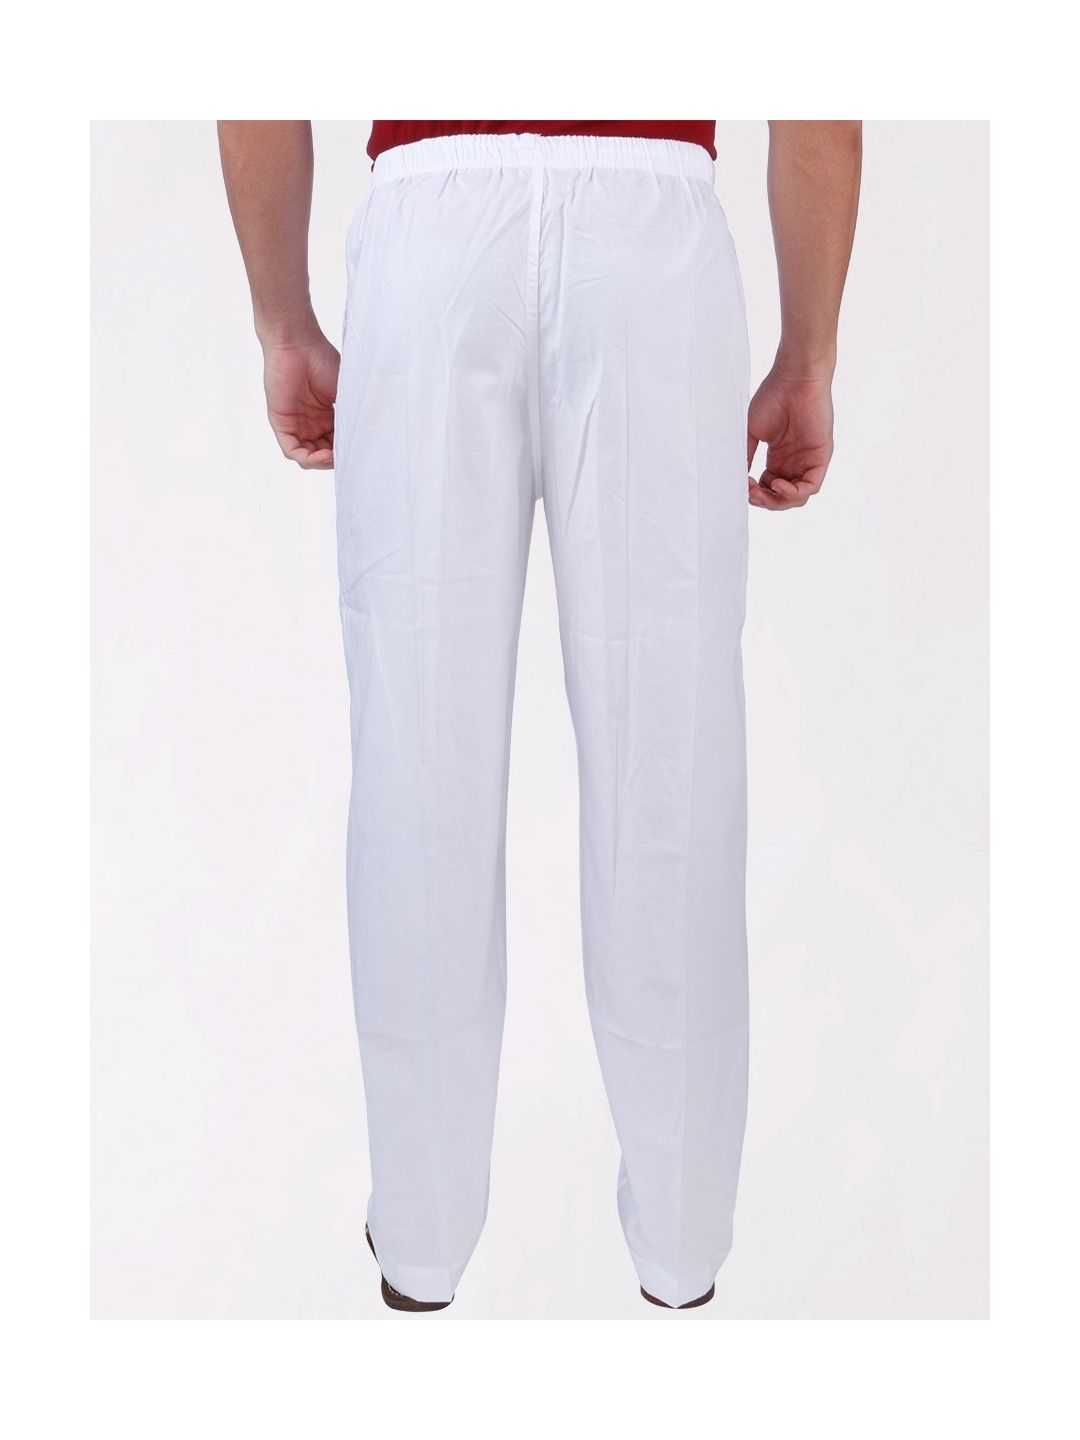 Cotton Pyjamas for Men - Buy Men's Pajamas Online in India – XYXX Apparels